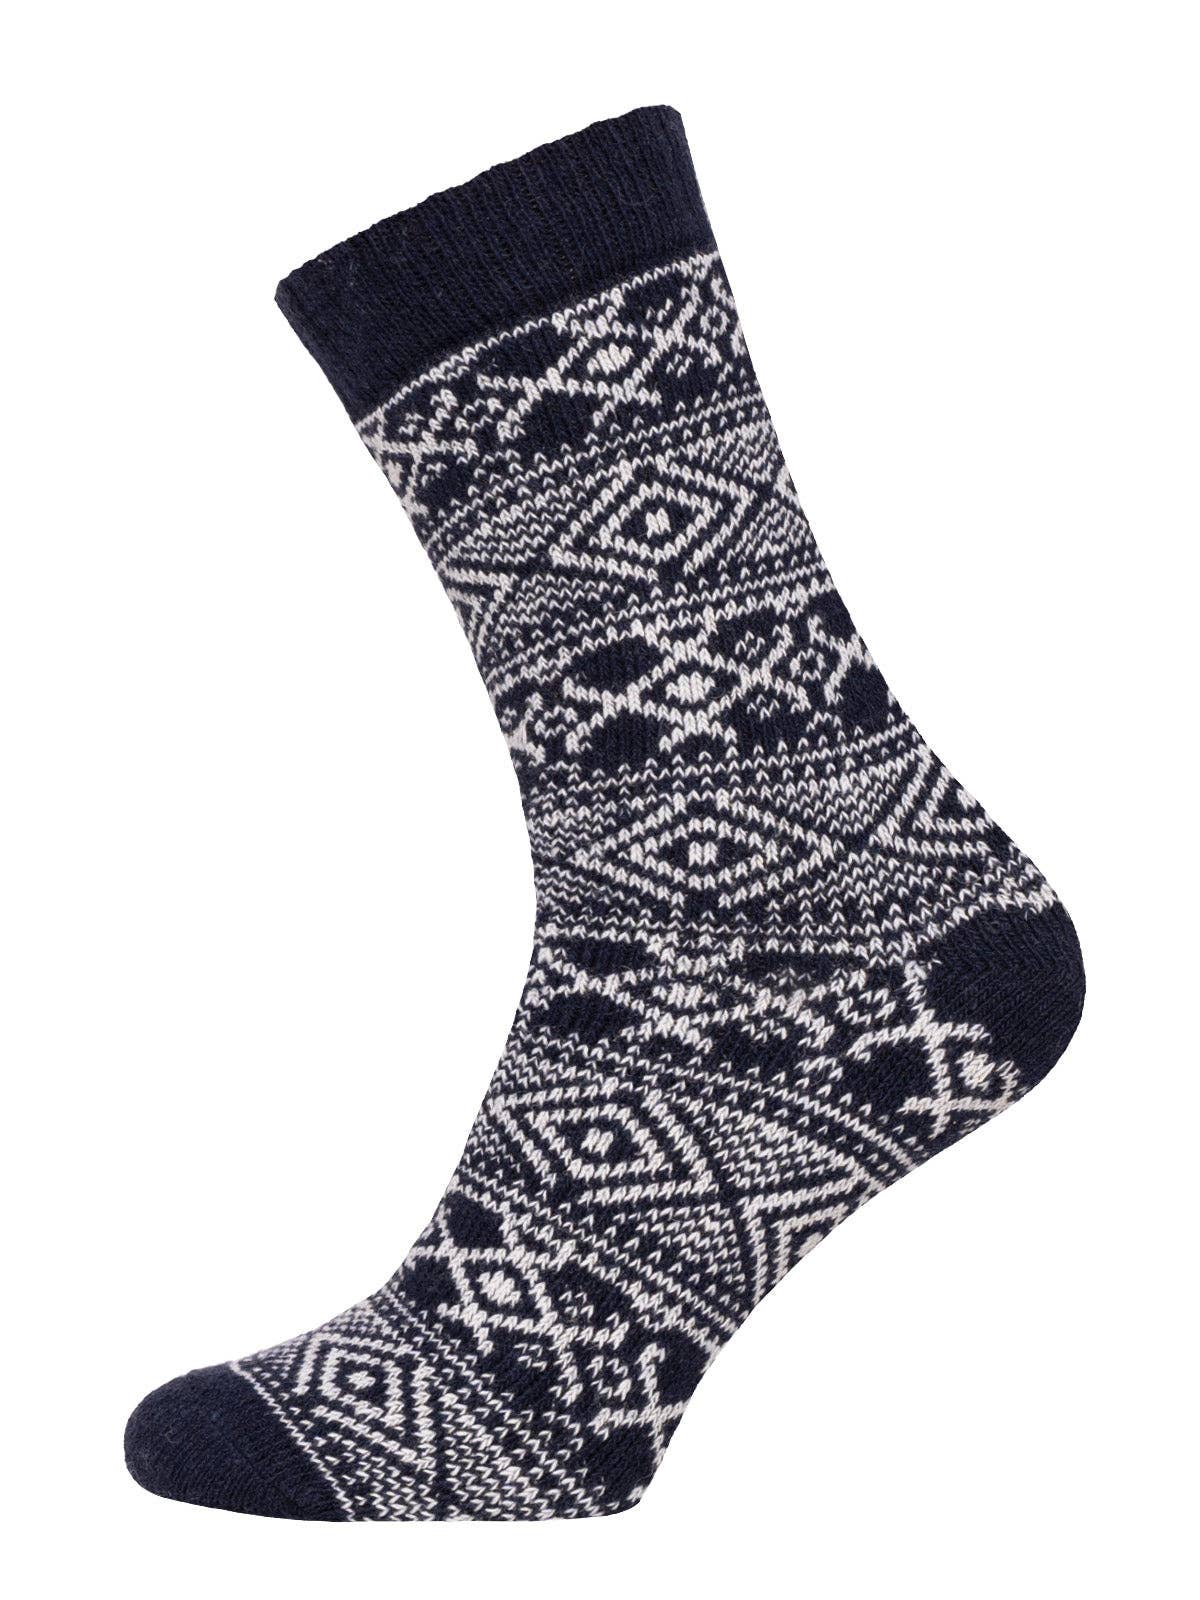 Socks: Norwegian Navy socks classic 45% wool content